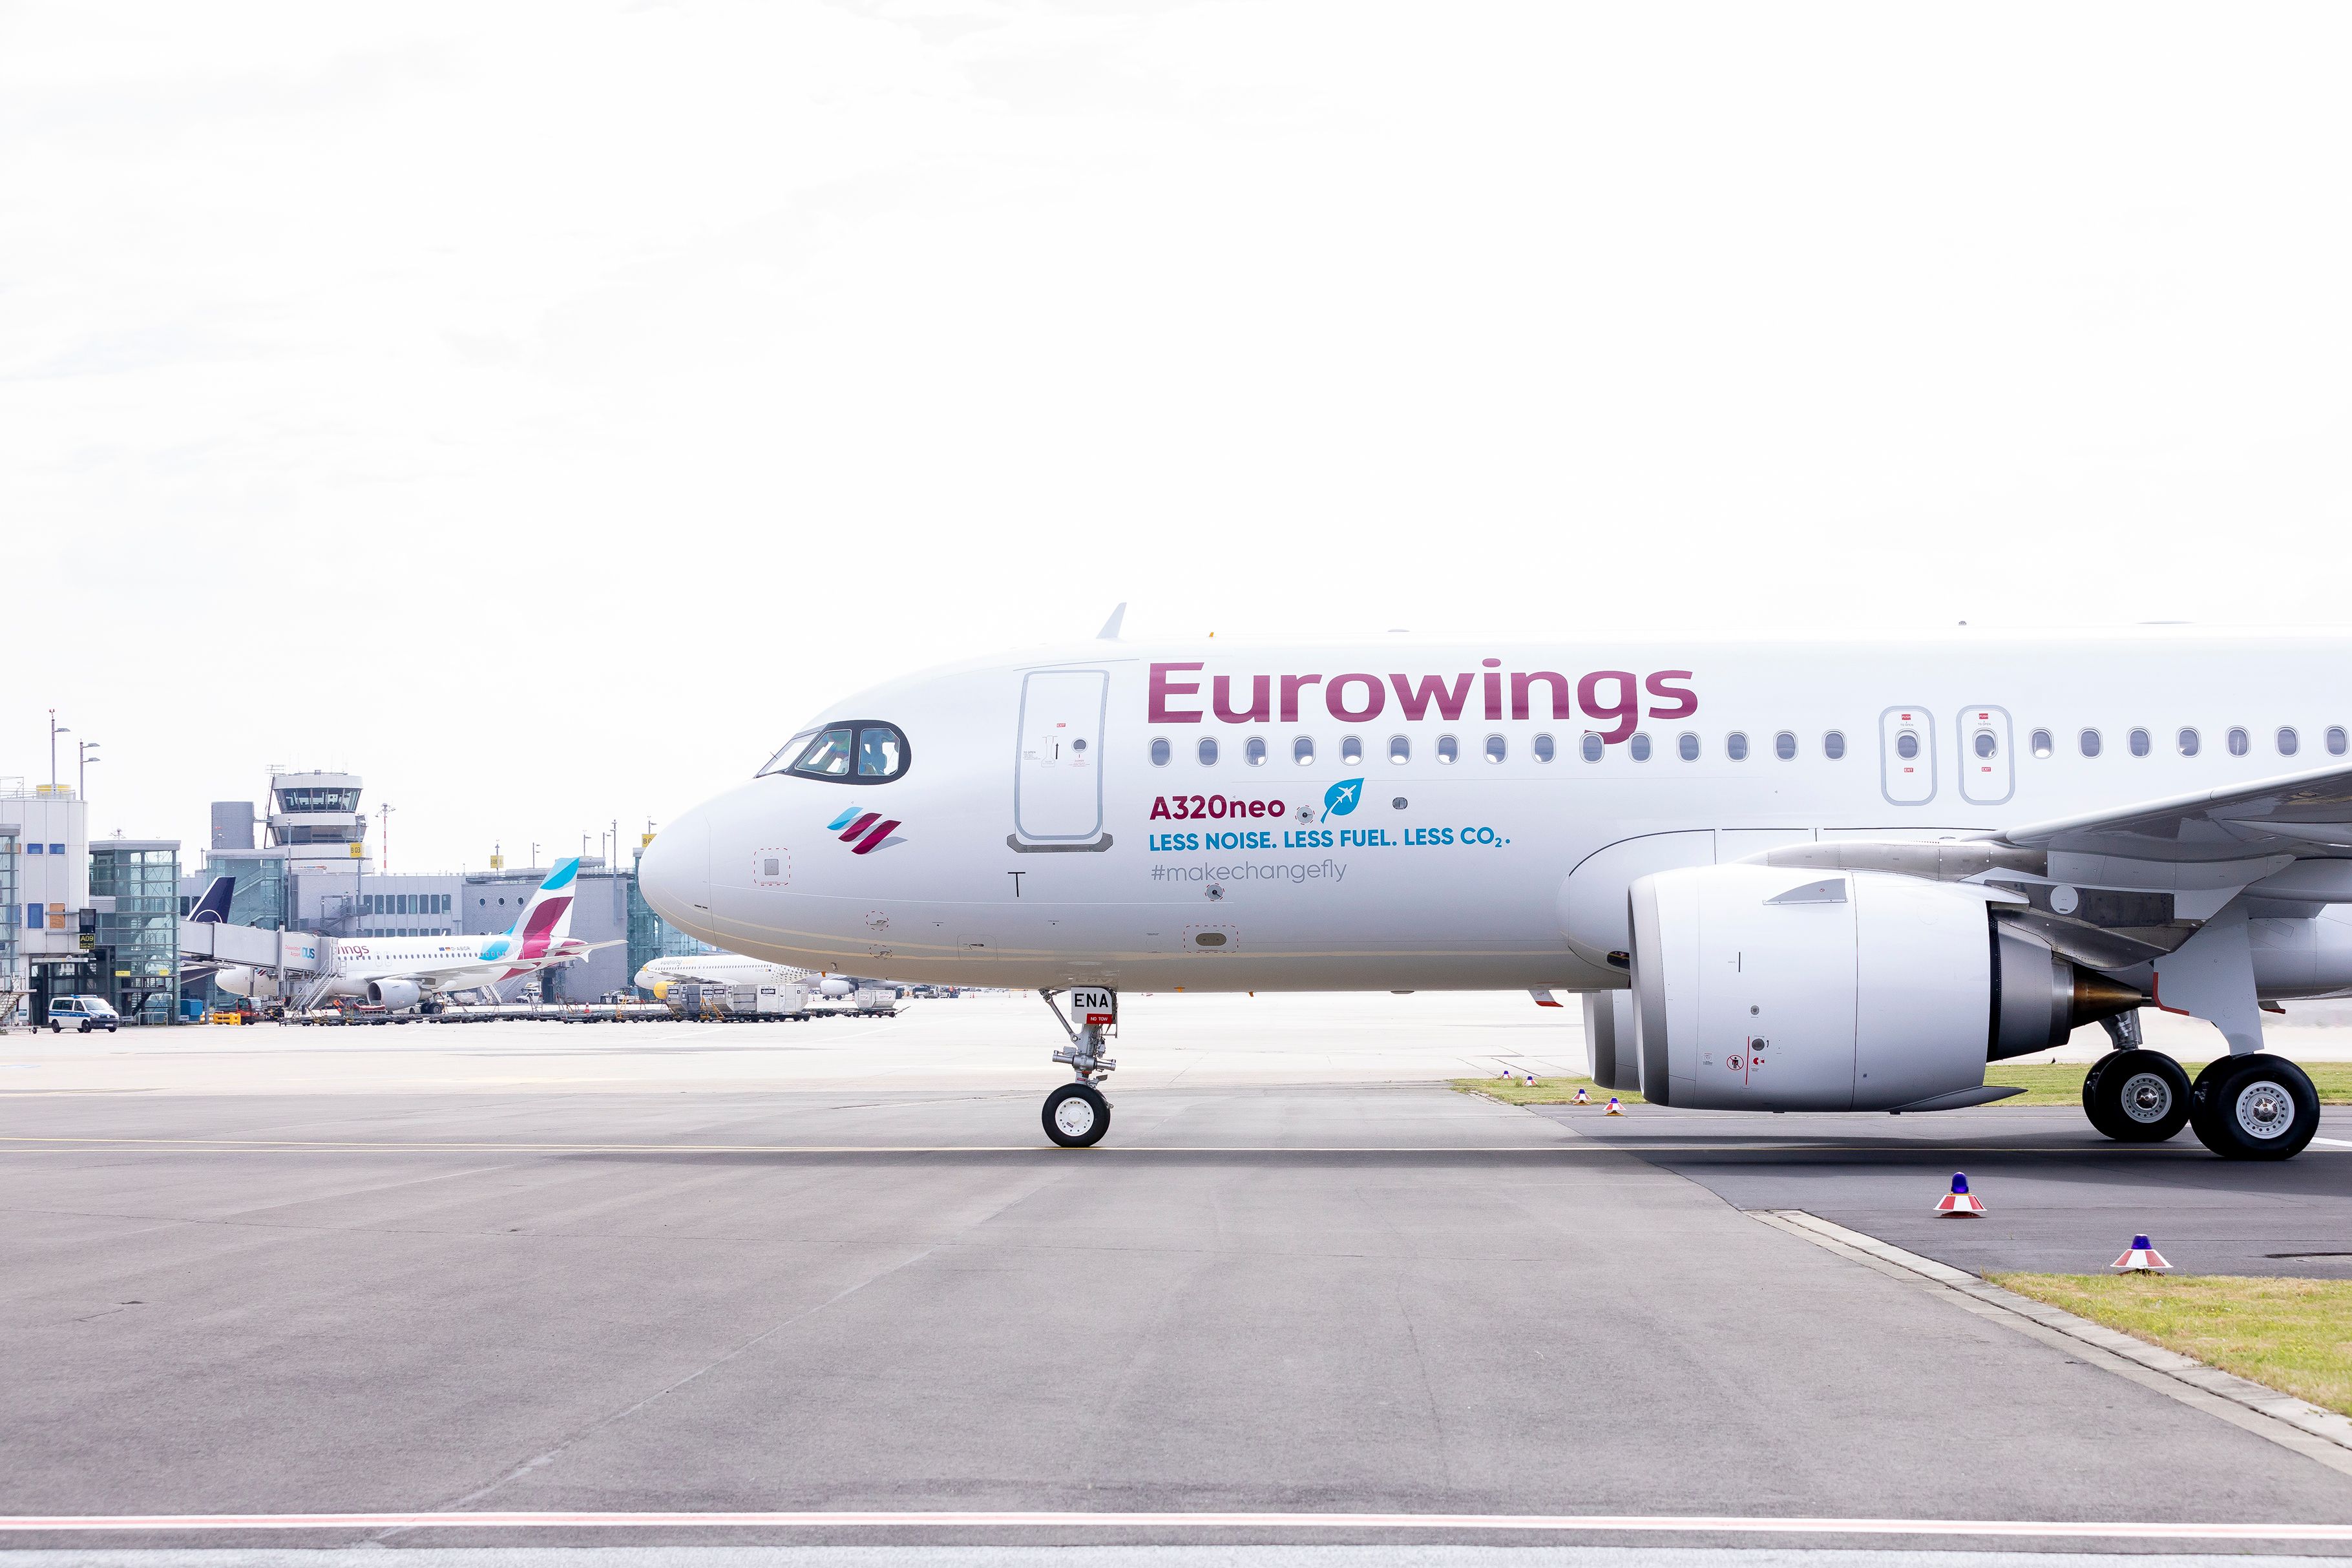 An Eurowings aircraft